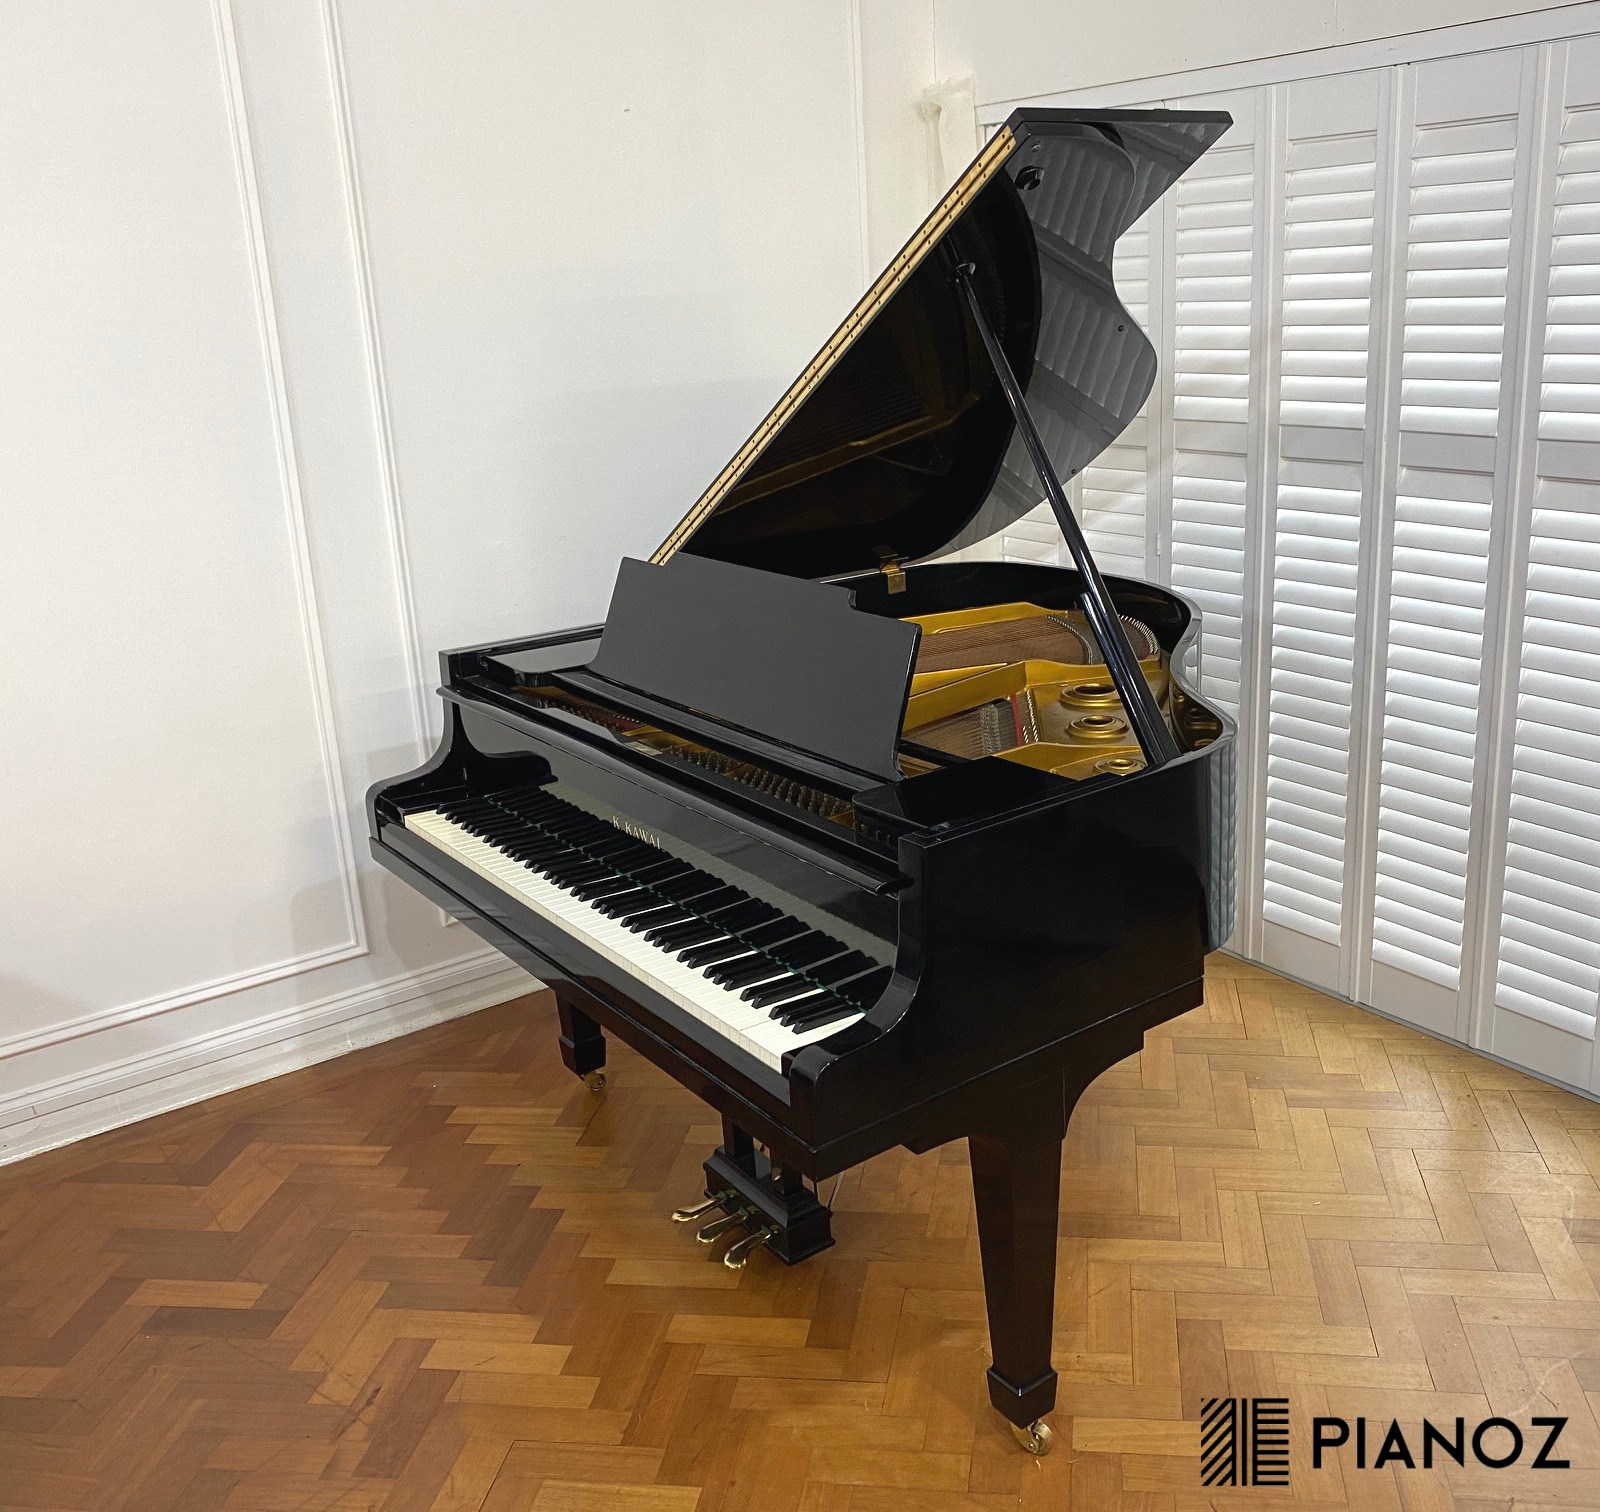 Kawai Japanese Baby Grand Piano piano for sale in UK